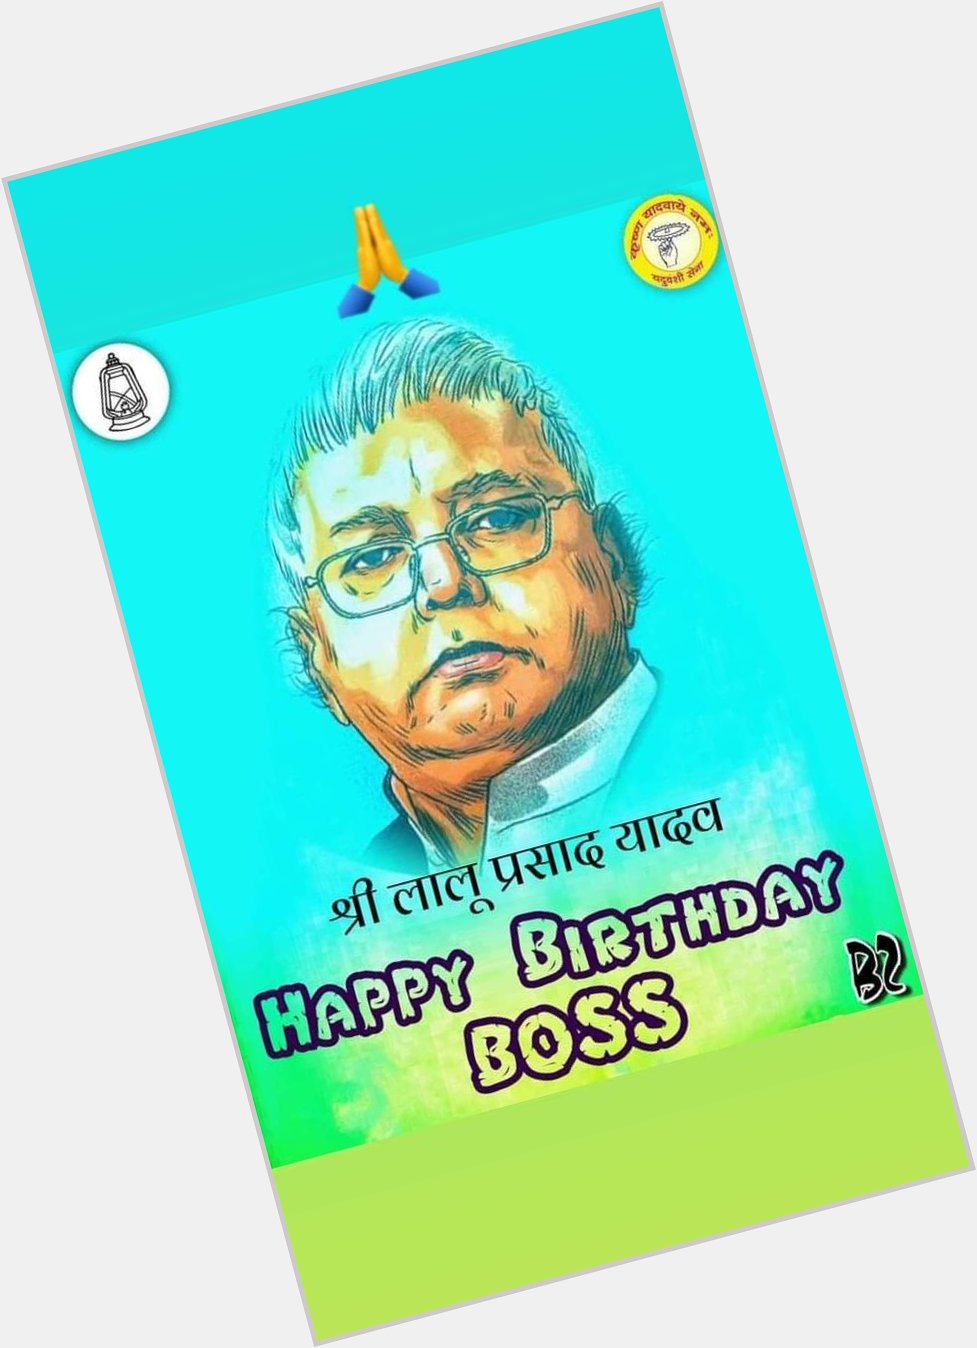 Happy Birthday Boss 
Lalu Prasad Yadav Jii
JAY RJD JAY BIHAR 